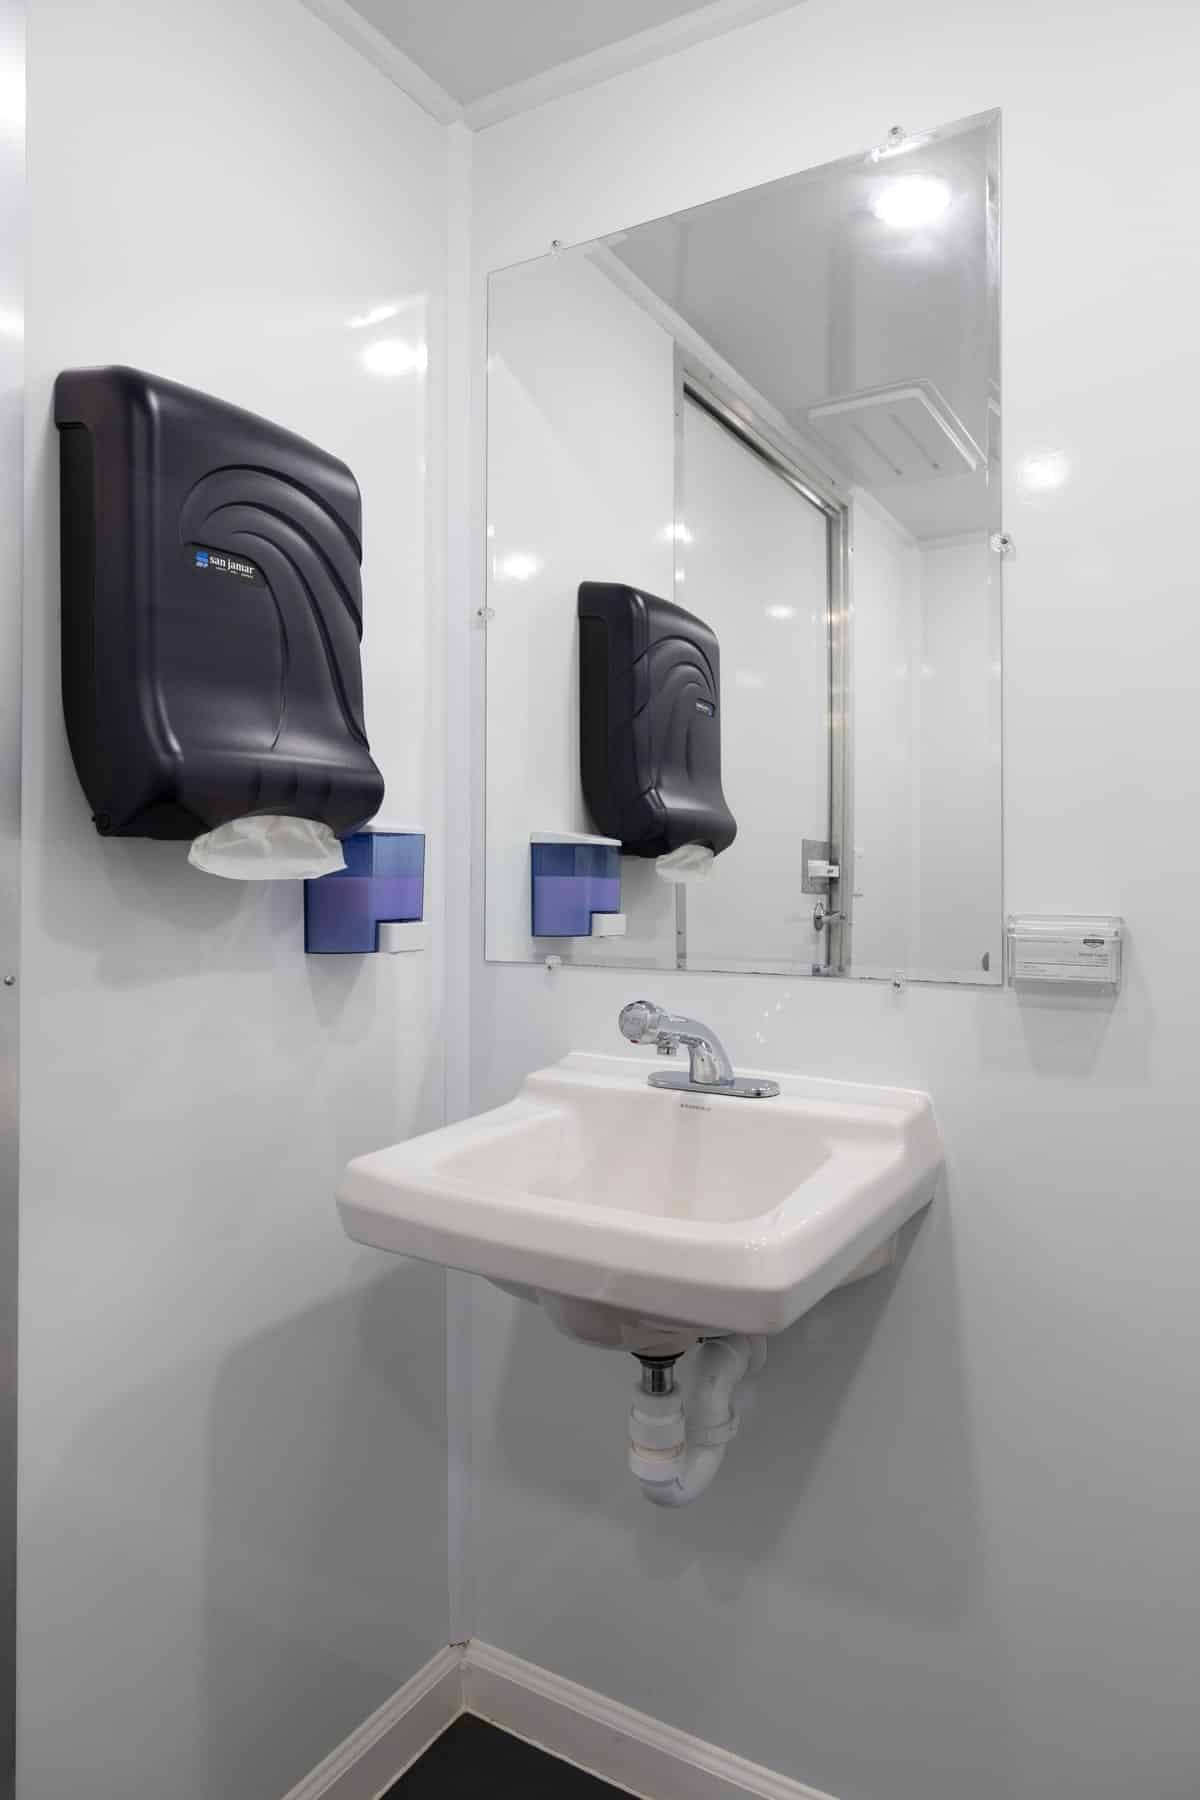 1-Station ADA Restroom & Shower Combo Trailer Rental – Interior View 3